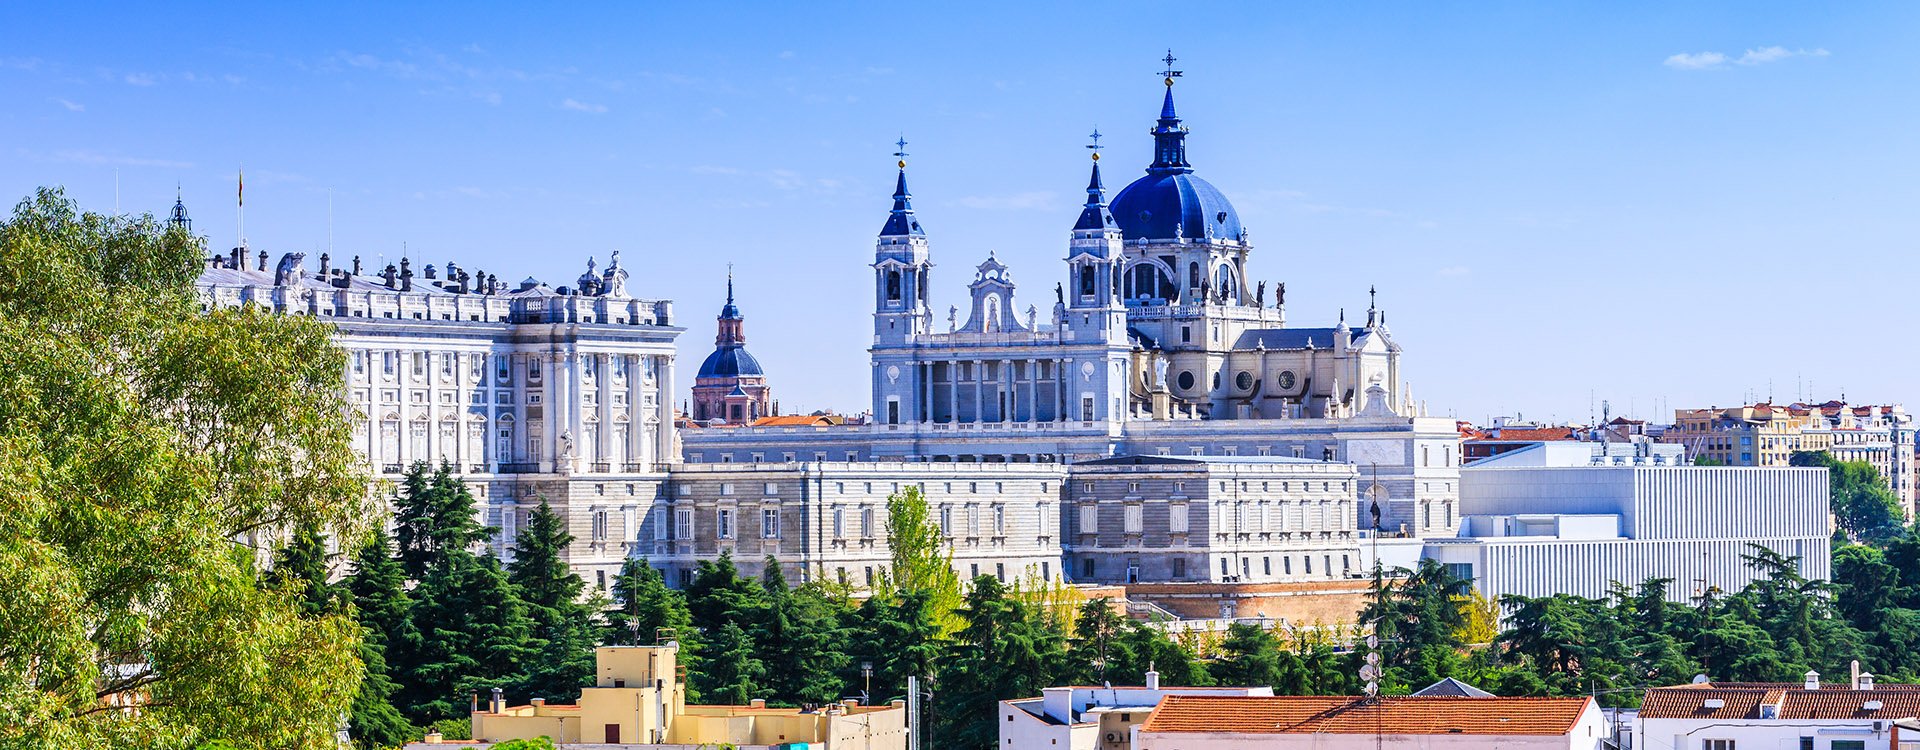 Madrid, Spain. Santa Maria la Real de La Almudena Cathedral and the Royal Palace